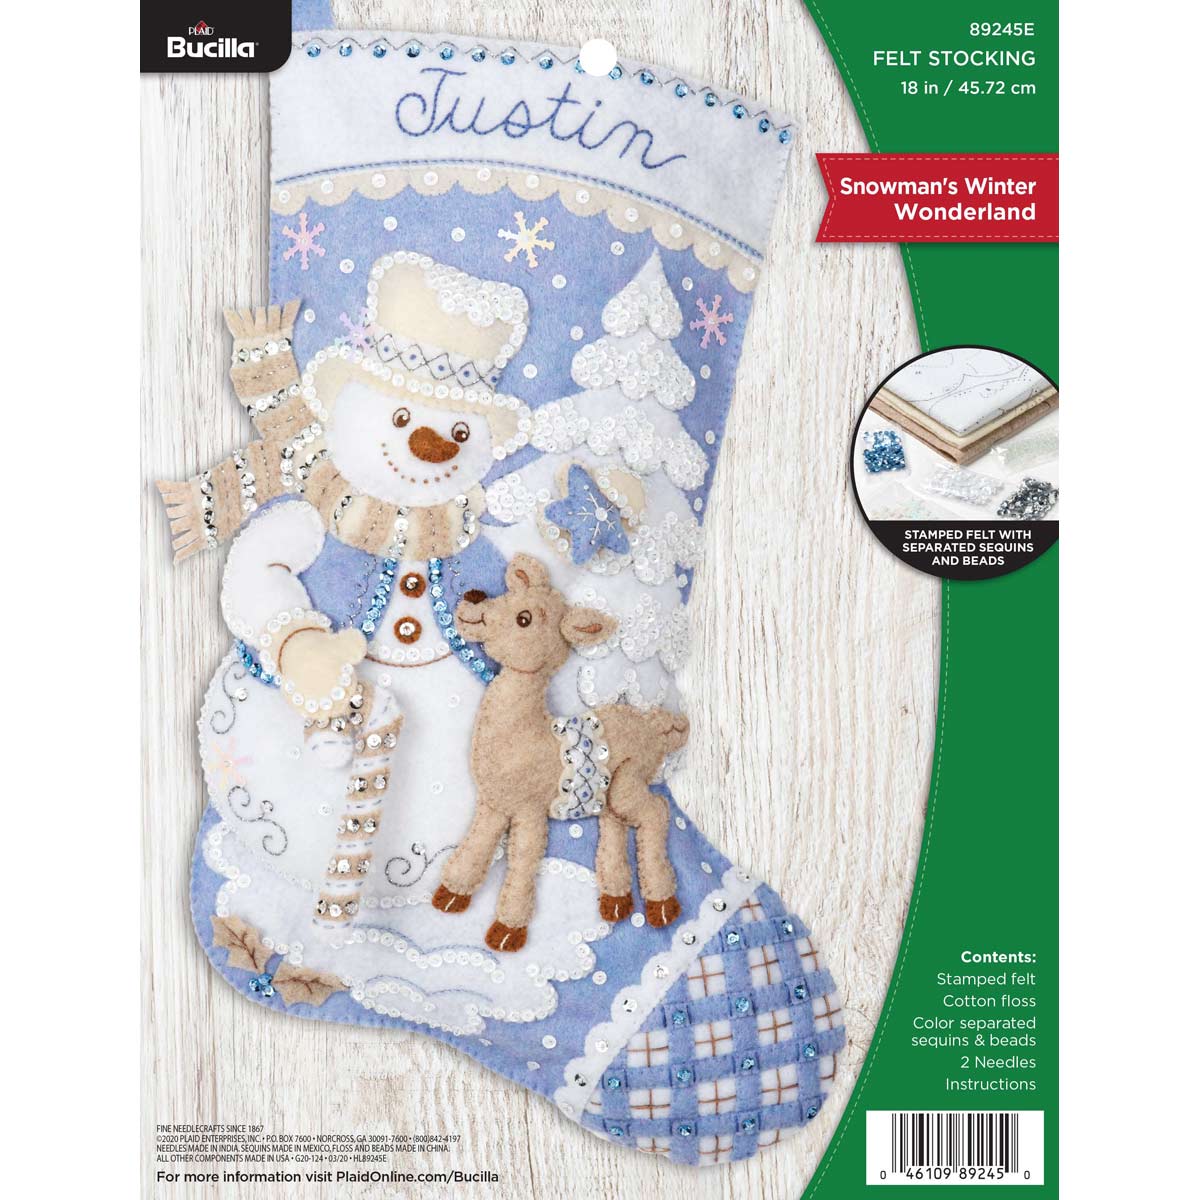 Snow Fun Felt Christmas Stocking Kit - Bucilla Felt Christmas Stockings at  Weekend Kits